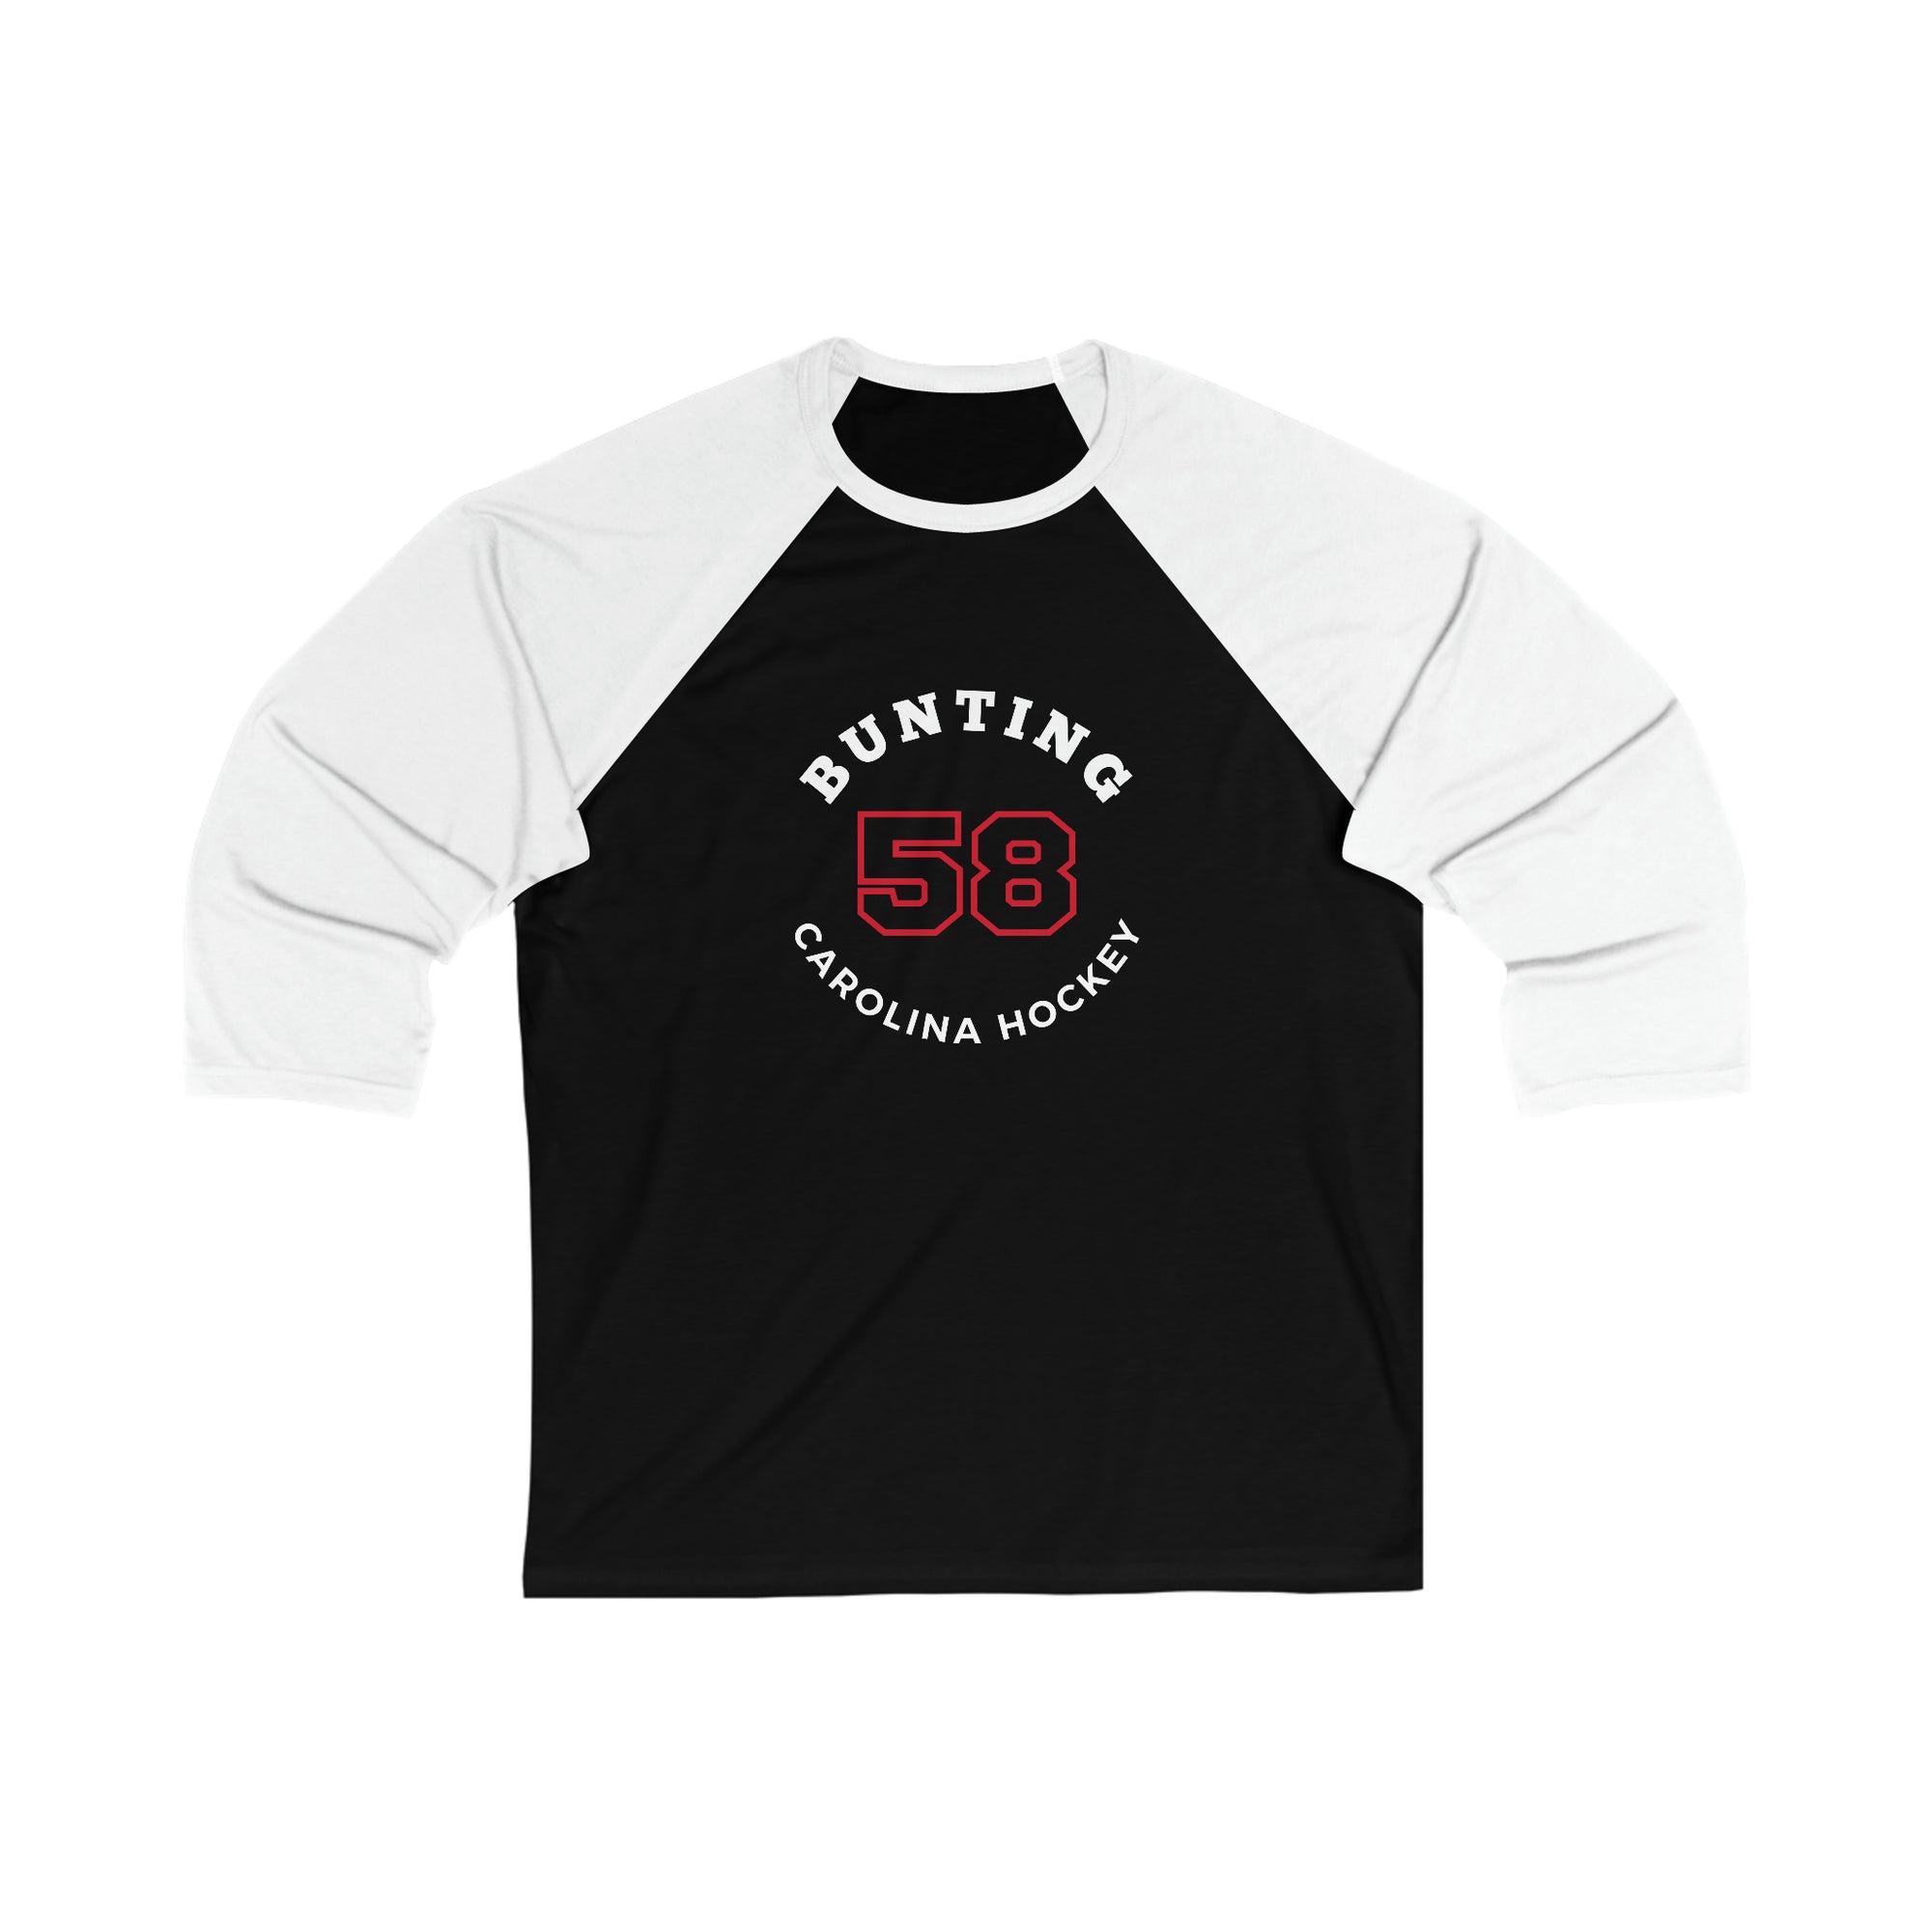 Bunting 58 Carolina Hockey Number Arch Design Unisex Tri-Blend 3/4 Sleeve Raglan Baseball Shirt